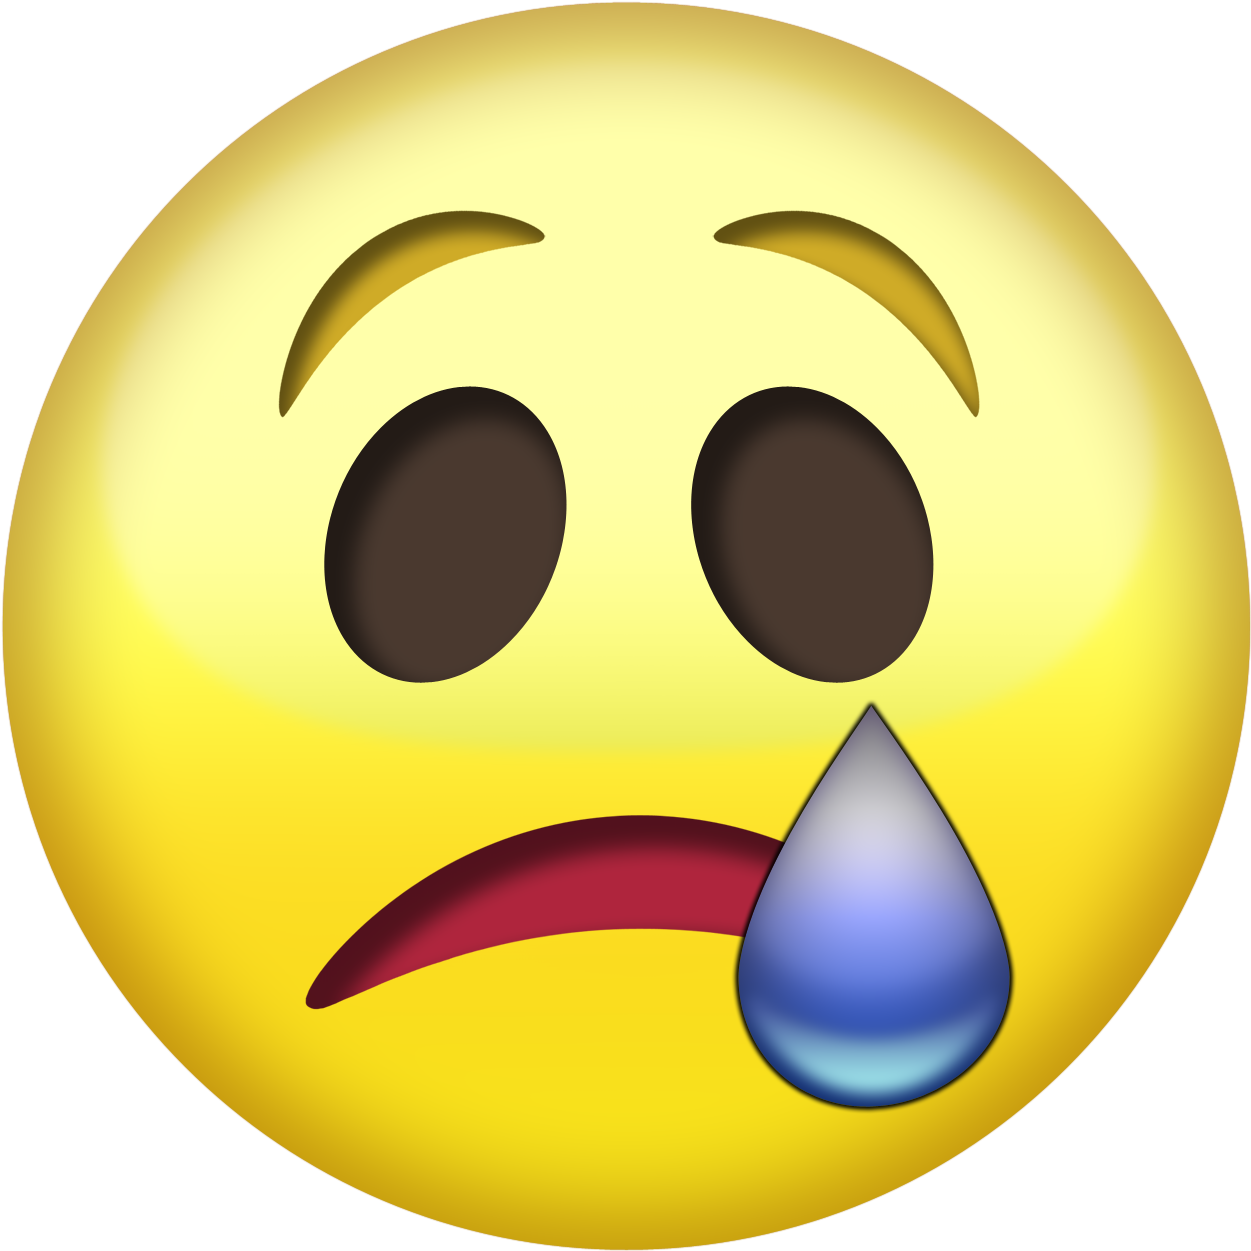 Sad Emoji PNG Pic Background